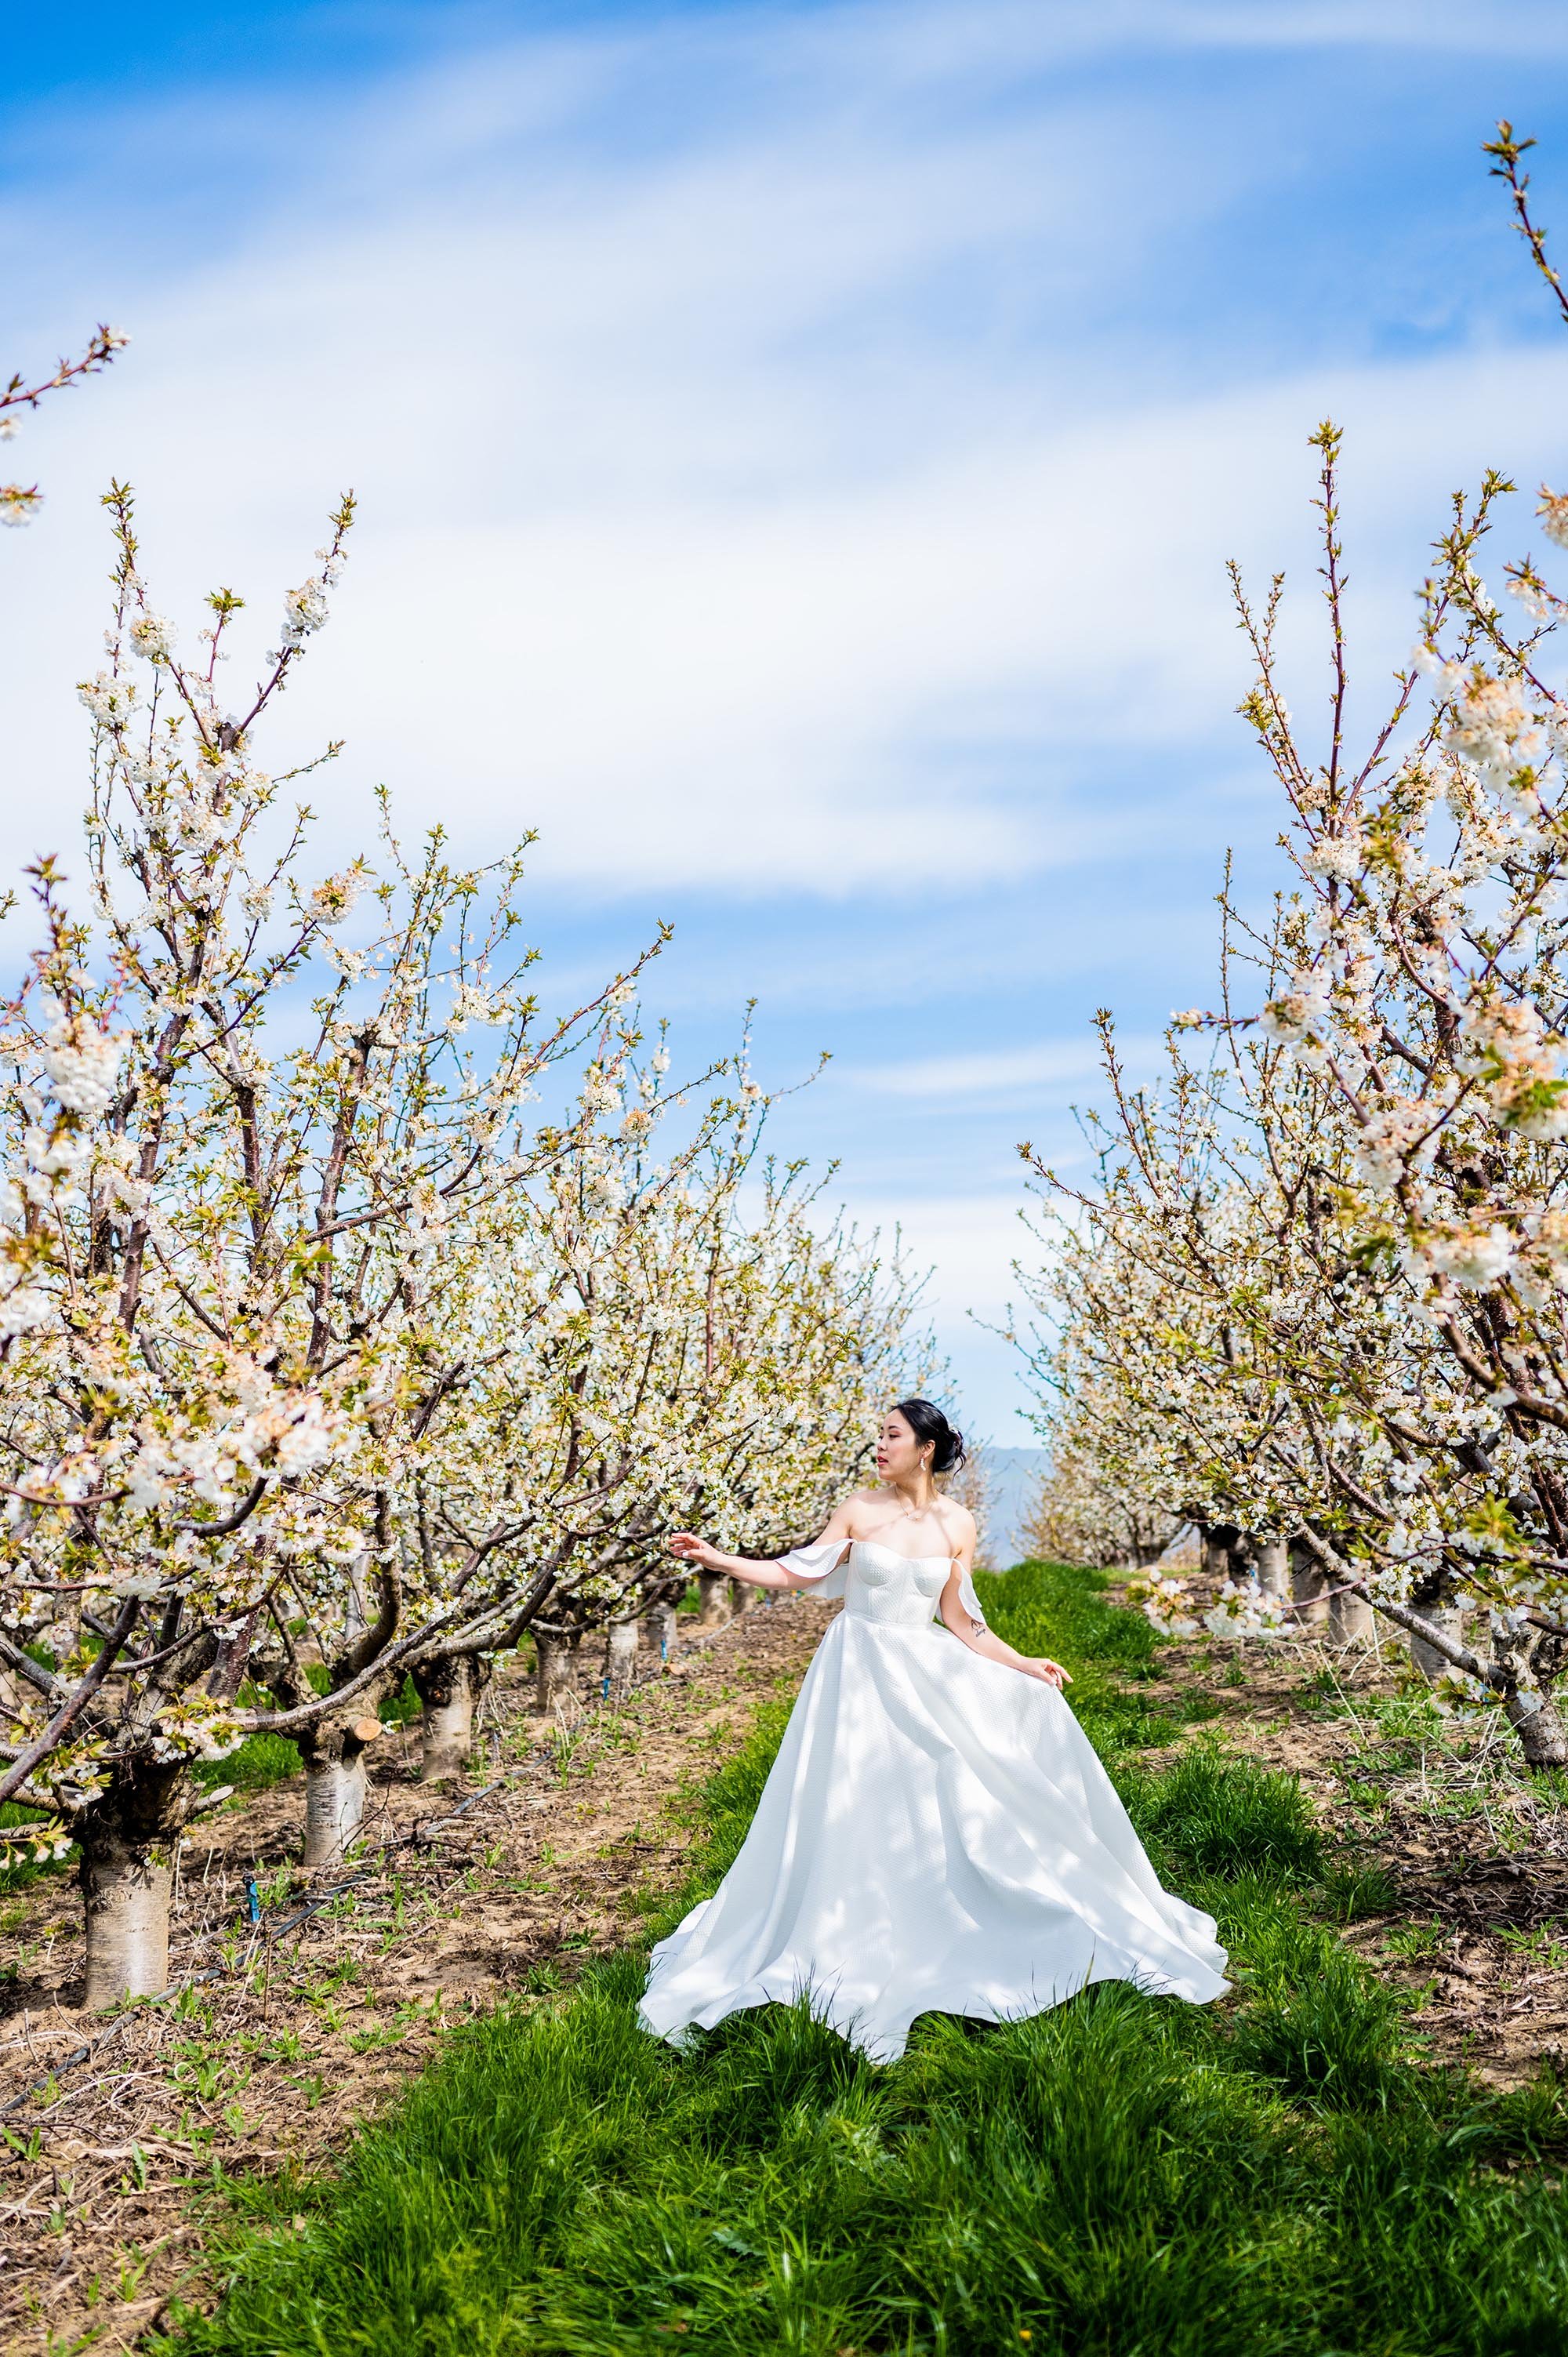 Alena-Leena-Mimosa-Wedding-Dress-Cherry-Blossom-03.jpg